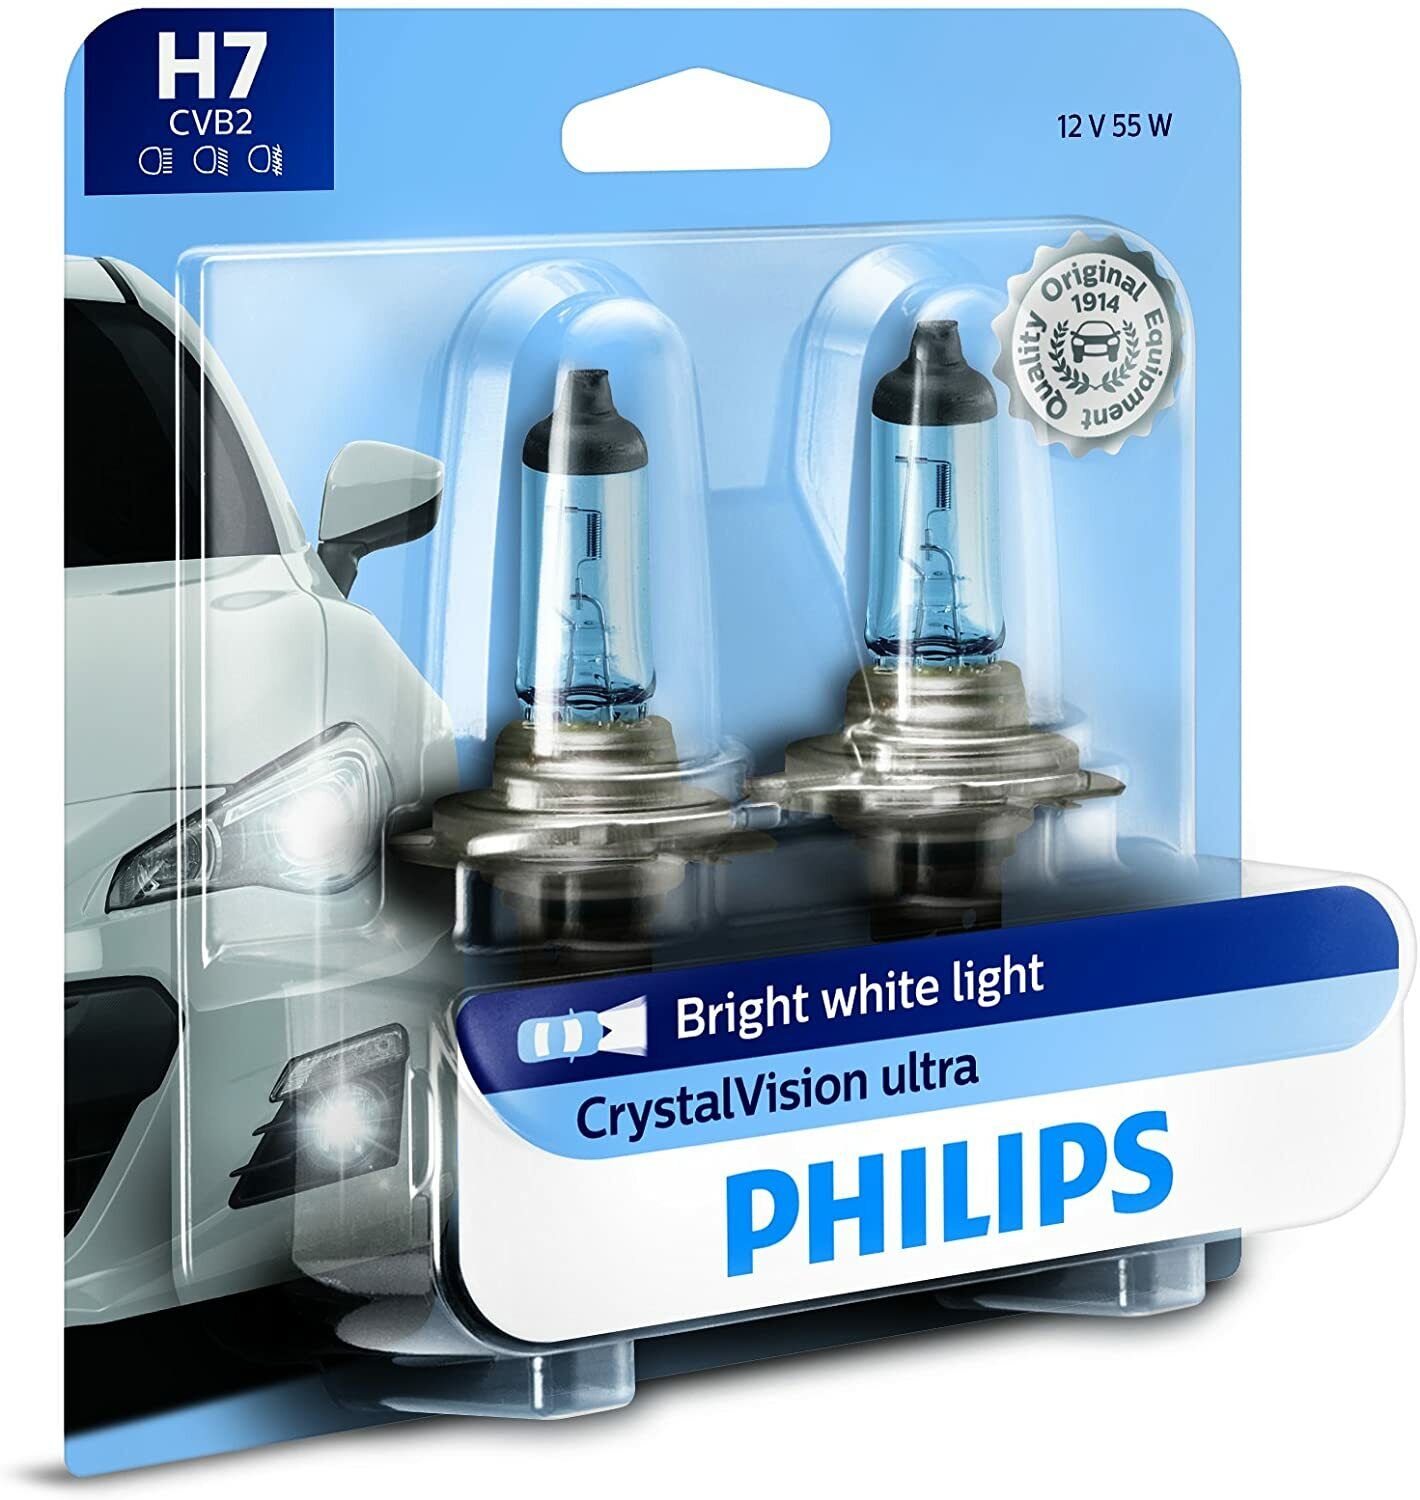 Philips H7 CVB2 CrystalVision Ultra Bright White Headlight Bulb, 2 Pack